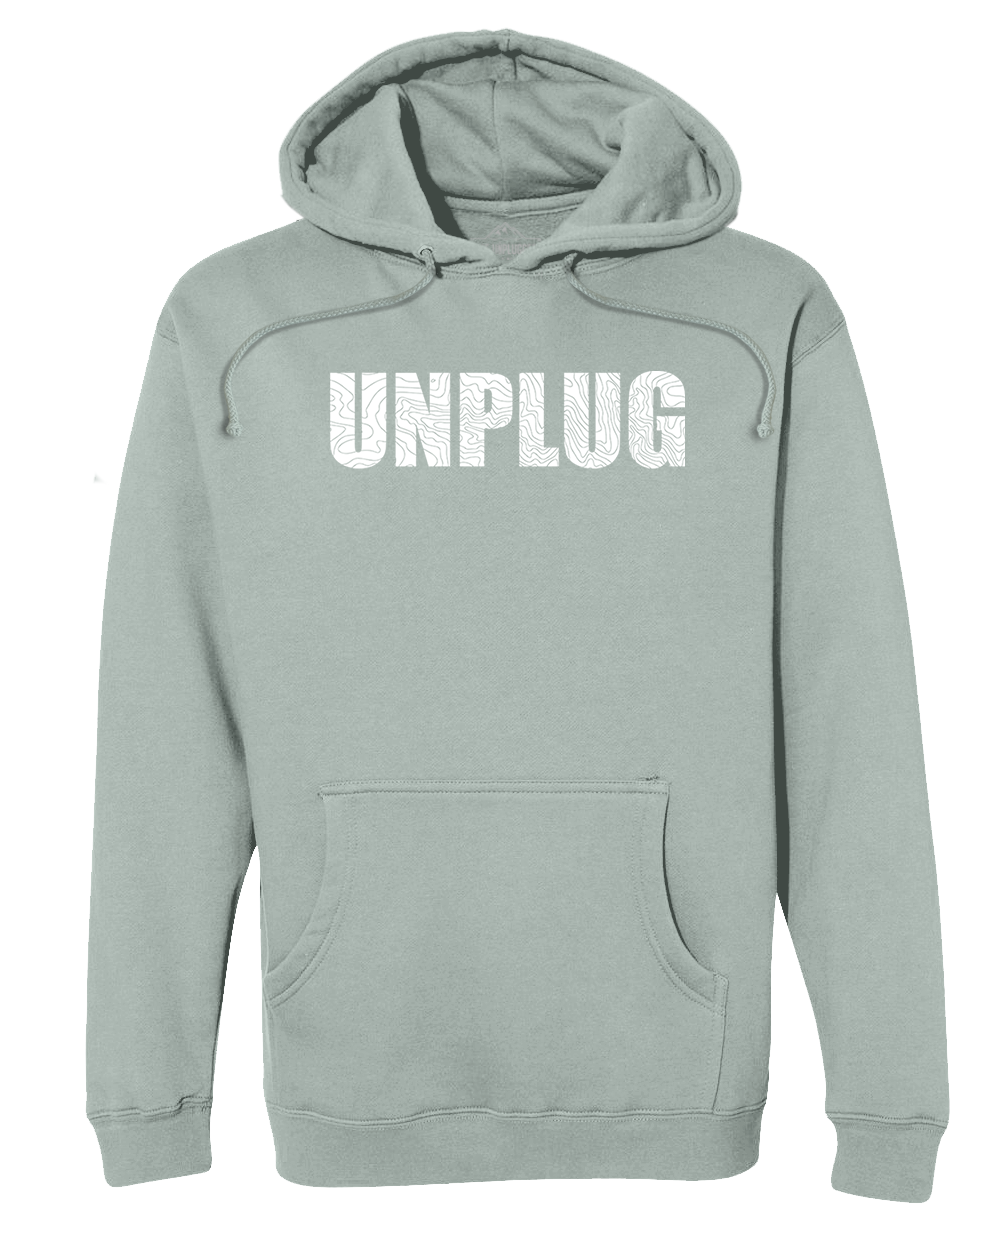 Unplug Topo Map Premium Heavyweight Hooded Sweatshirt - Life Unplugged